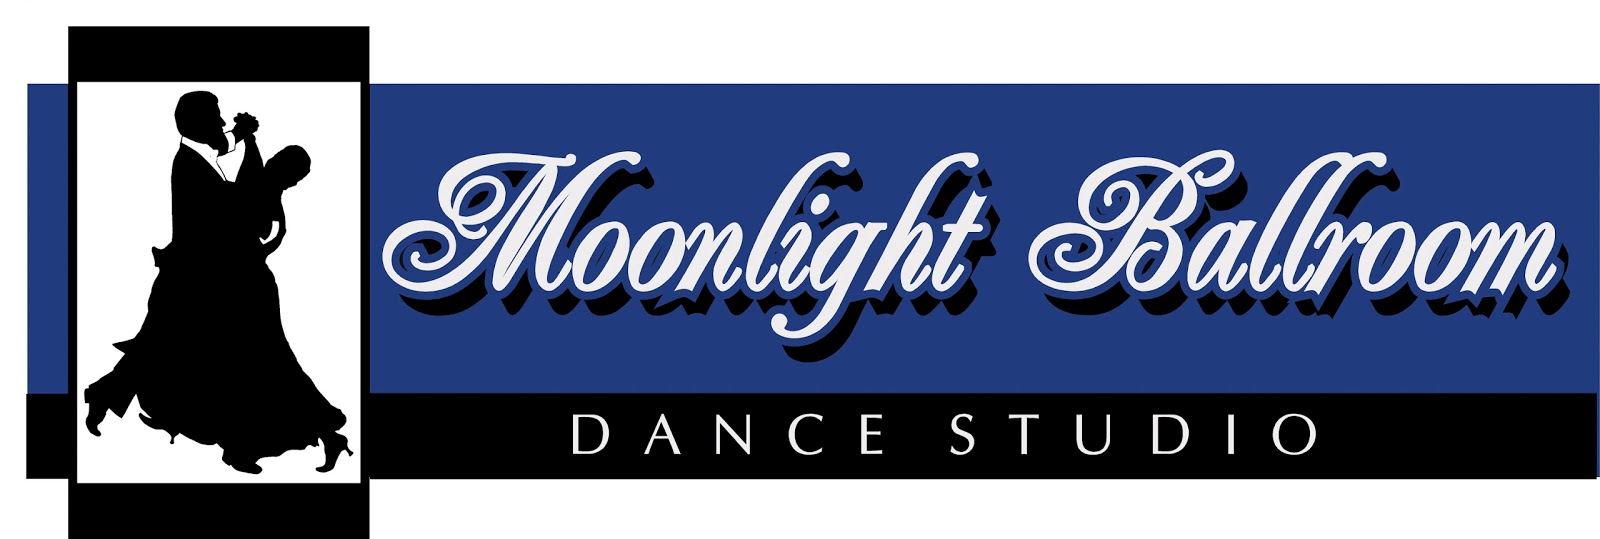 Photo of Moonlight Ballroom Dance Studio in Glen Rock City, New Jersey, United States - 2 Picture of Point of interest, Establishment